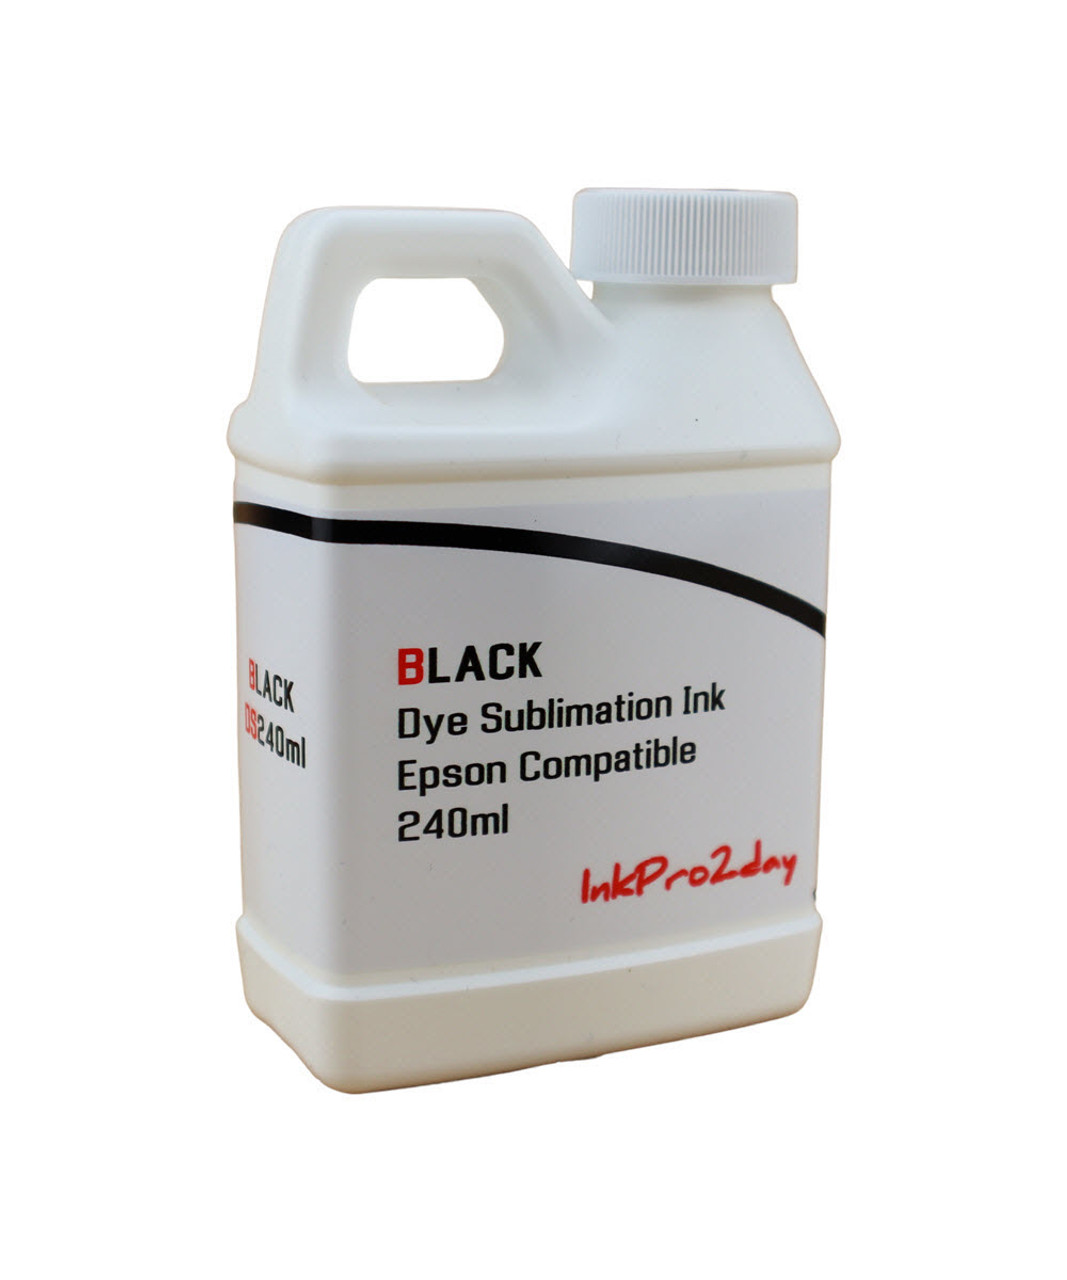 Black 240ml bottle Dye Sublimation Ink for Epson WorkForce WF-3540, WorkForce WF-7010, WorkForce WF-7510, WorkForce WF-7520 Printers